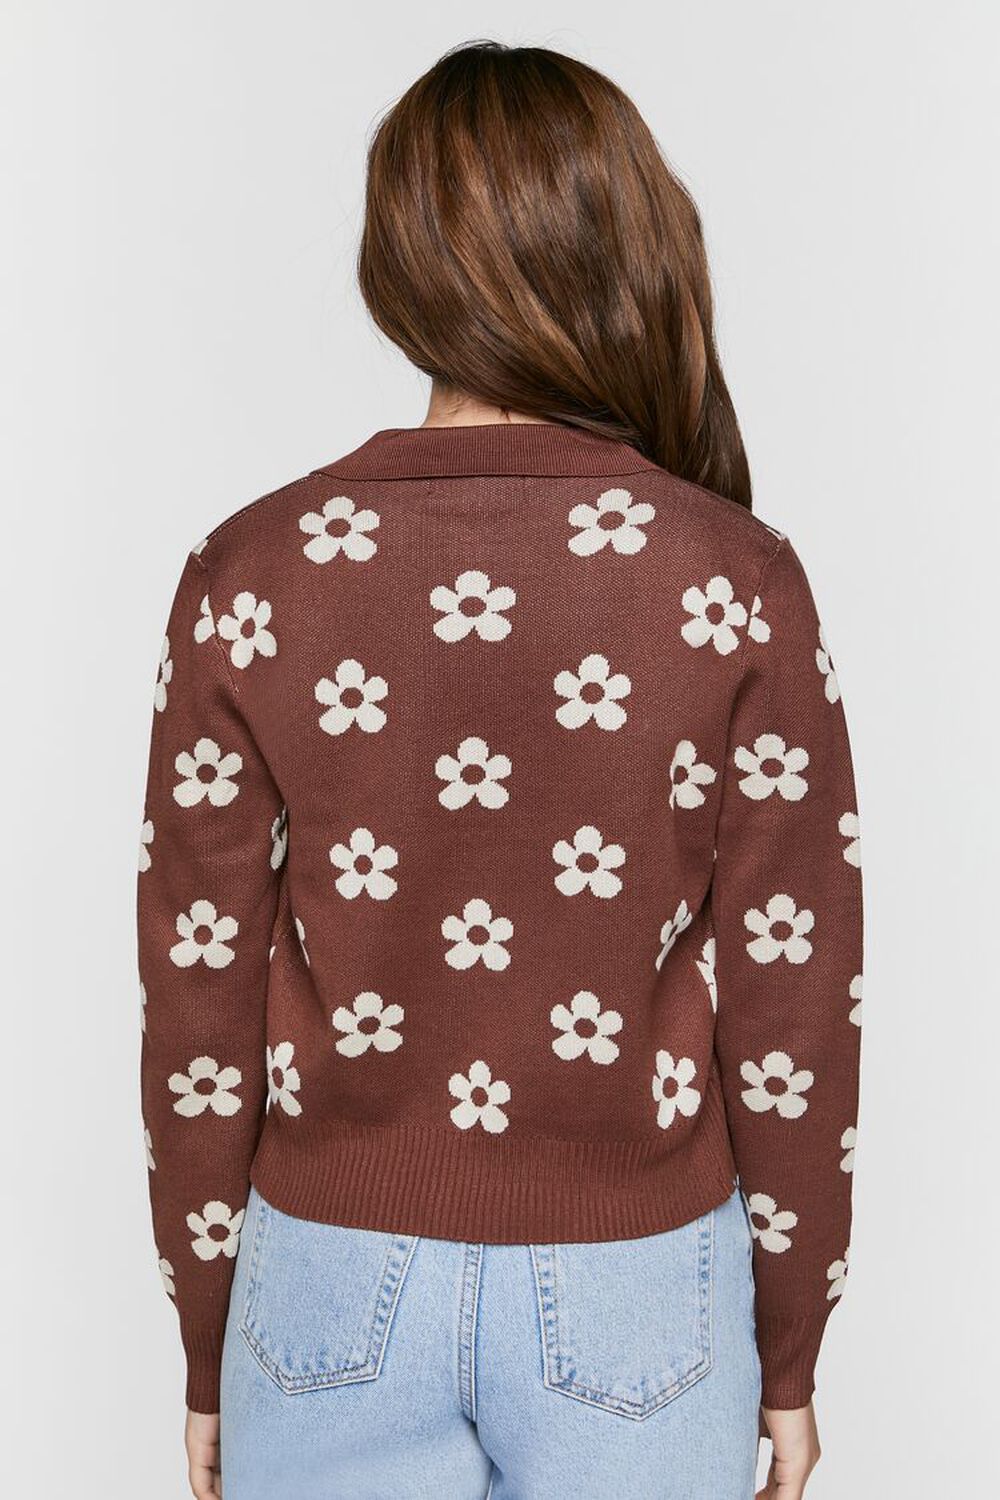 BROWN/MULTI Floral Print Cardigan Sweater, image 3